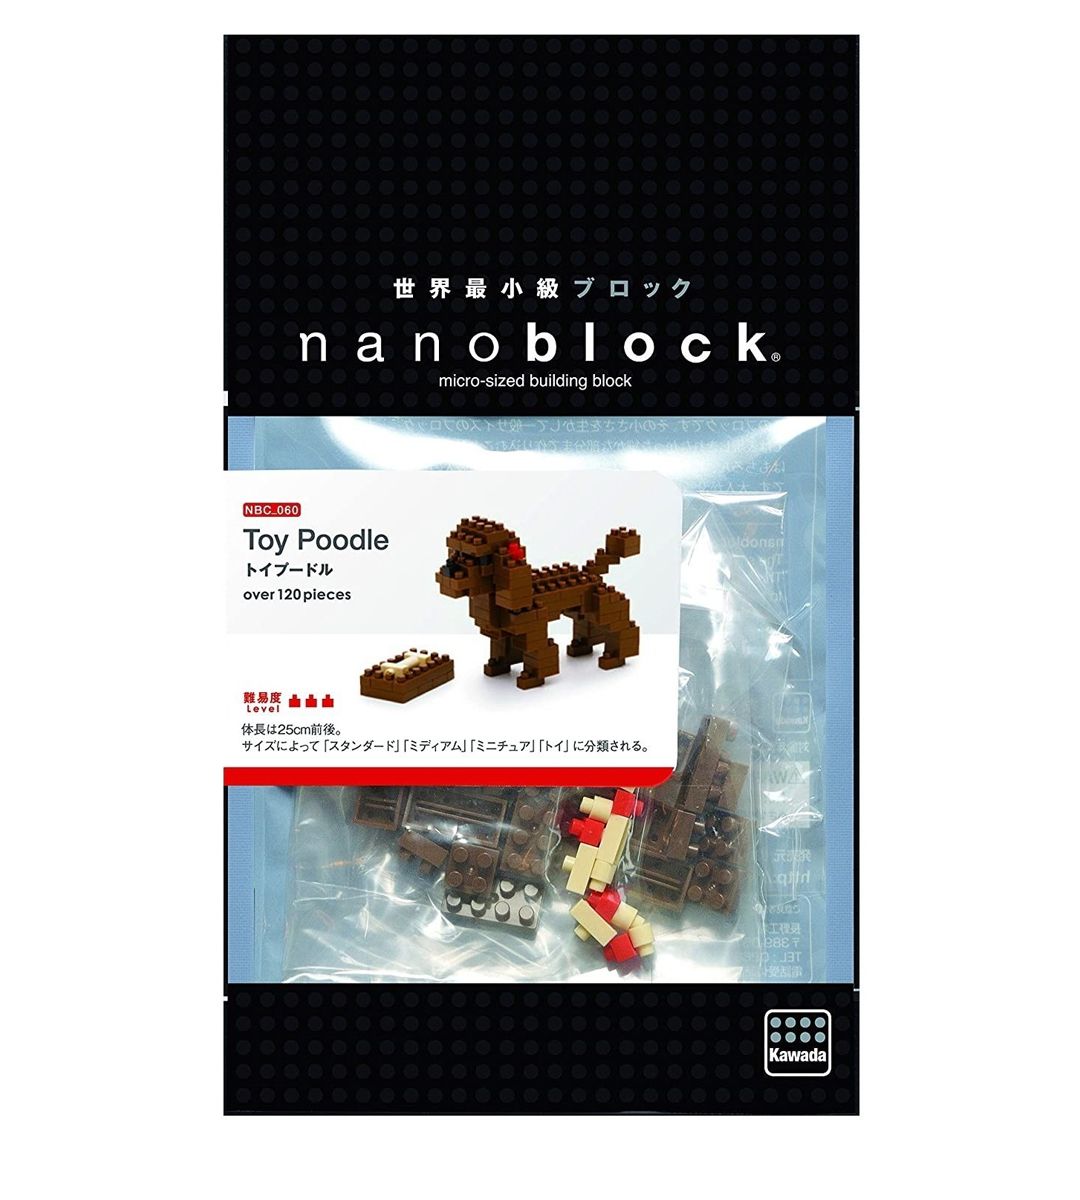 Nanoblock - Toy Poodle - NBC 060